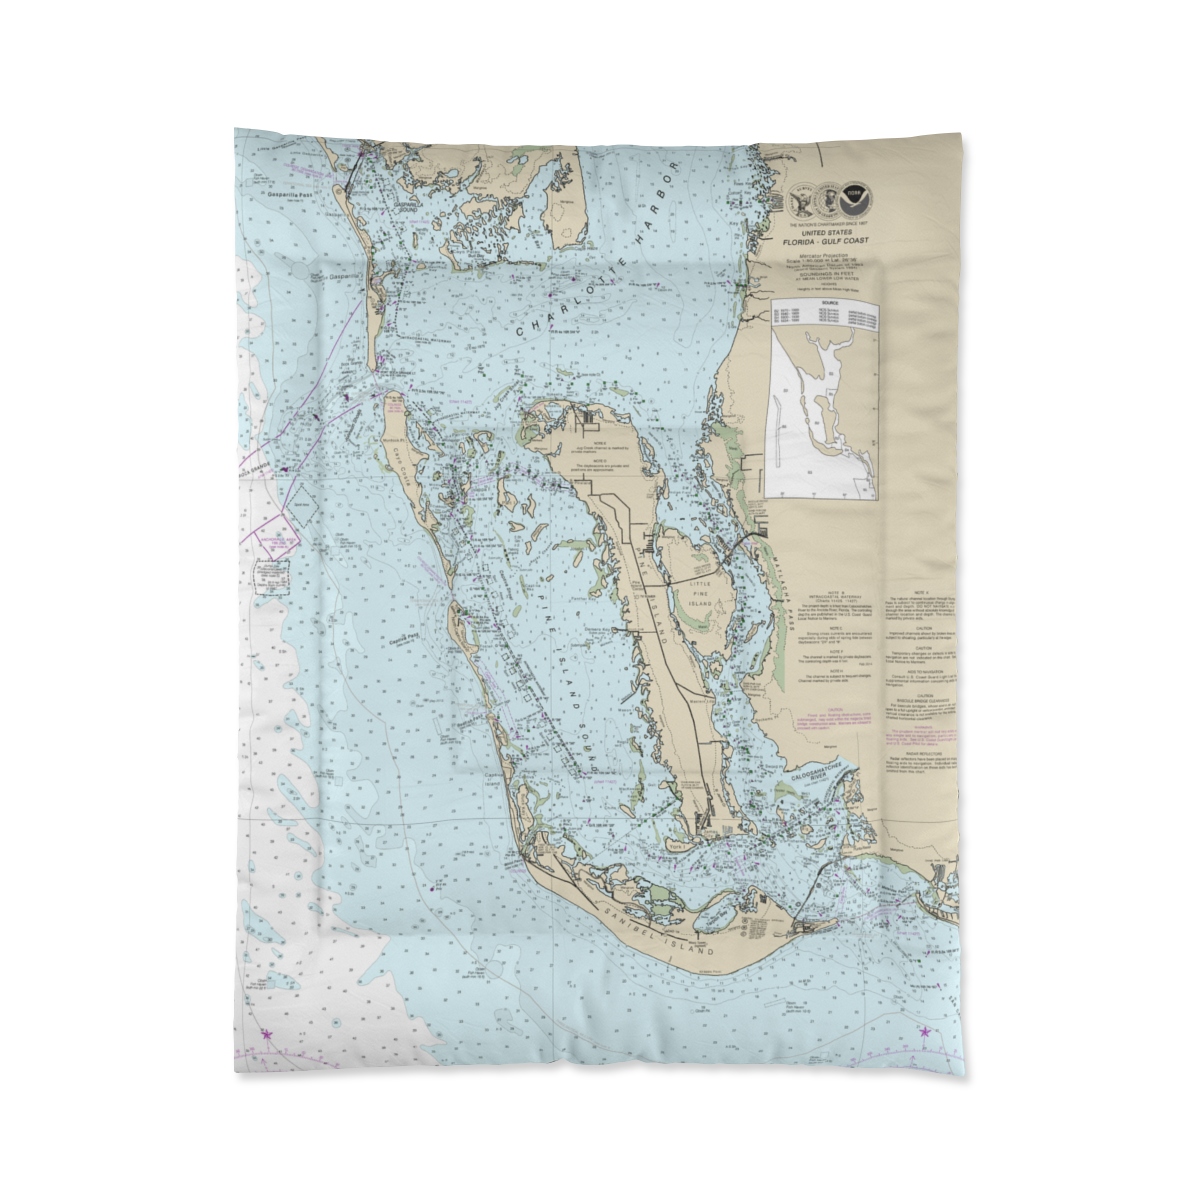 Nautical Chart Captiva Island